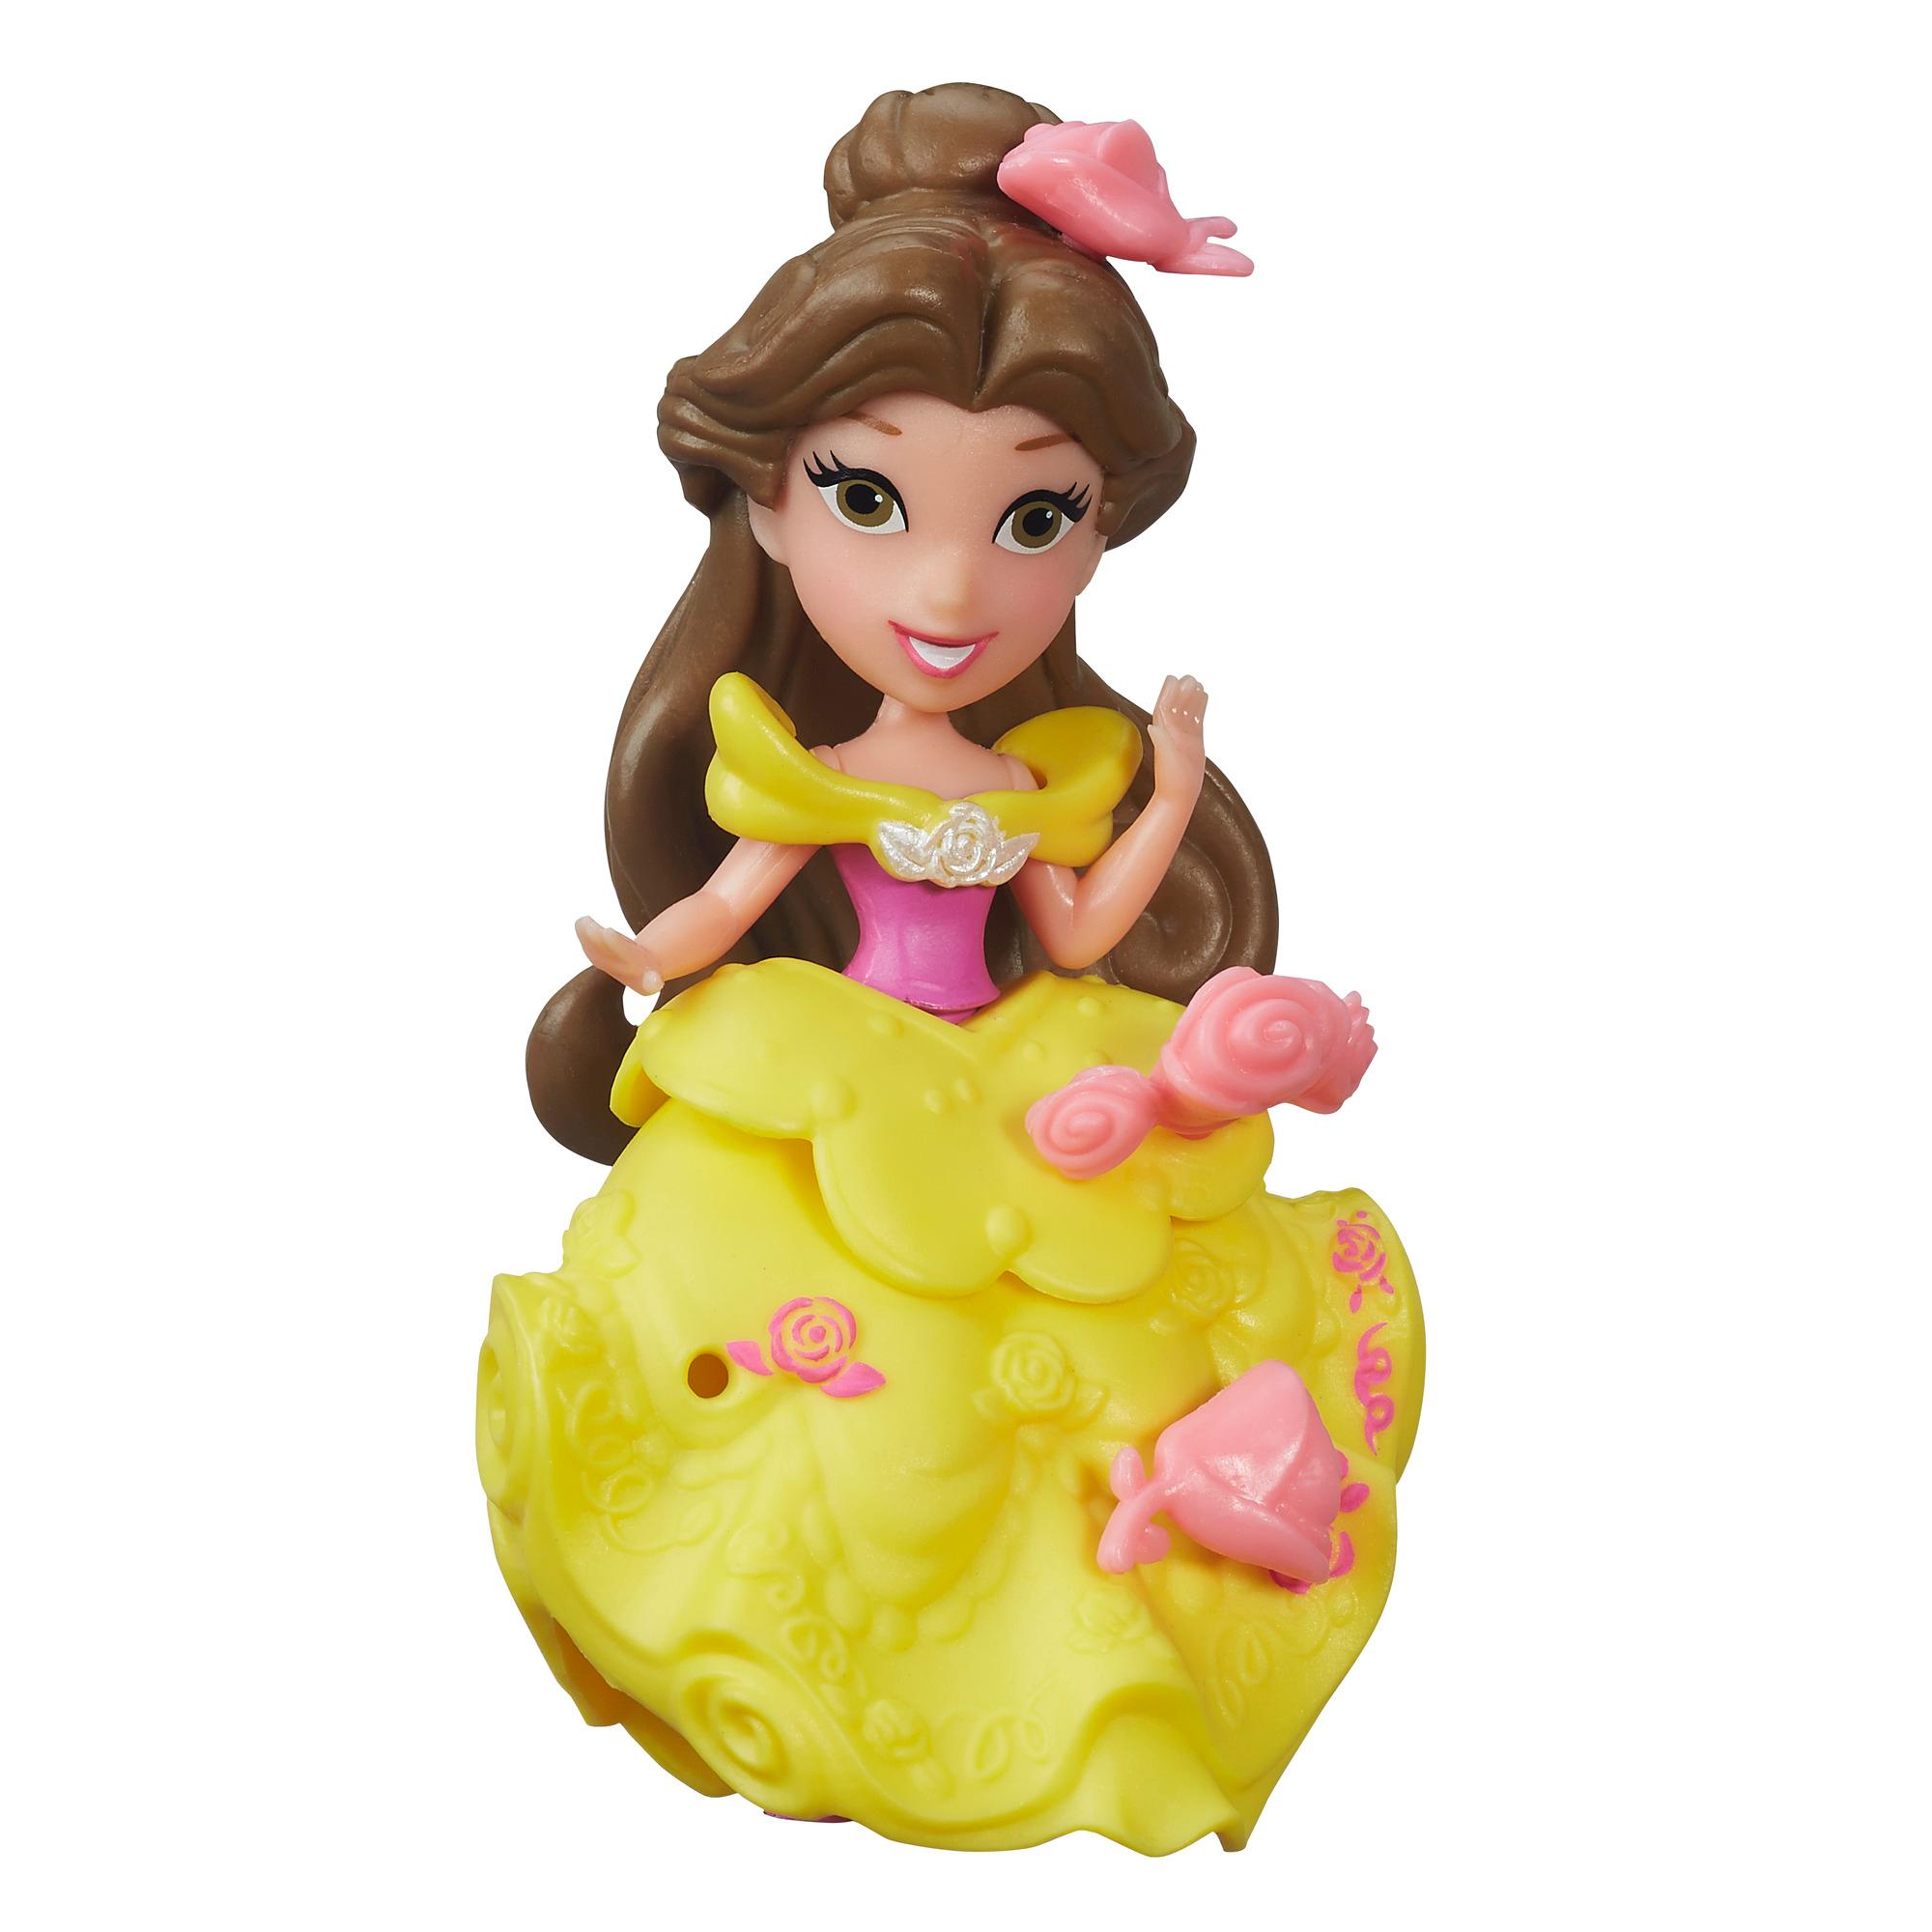 Disney Princess Little Kingdom Classic Belle | HasbroToyShop